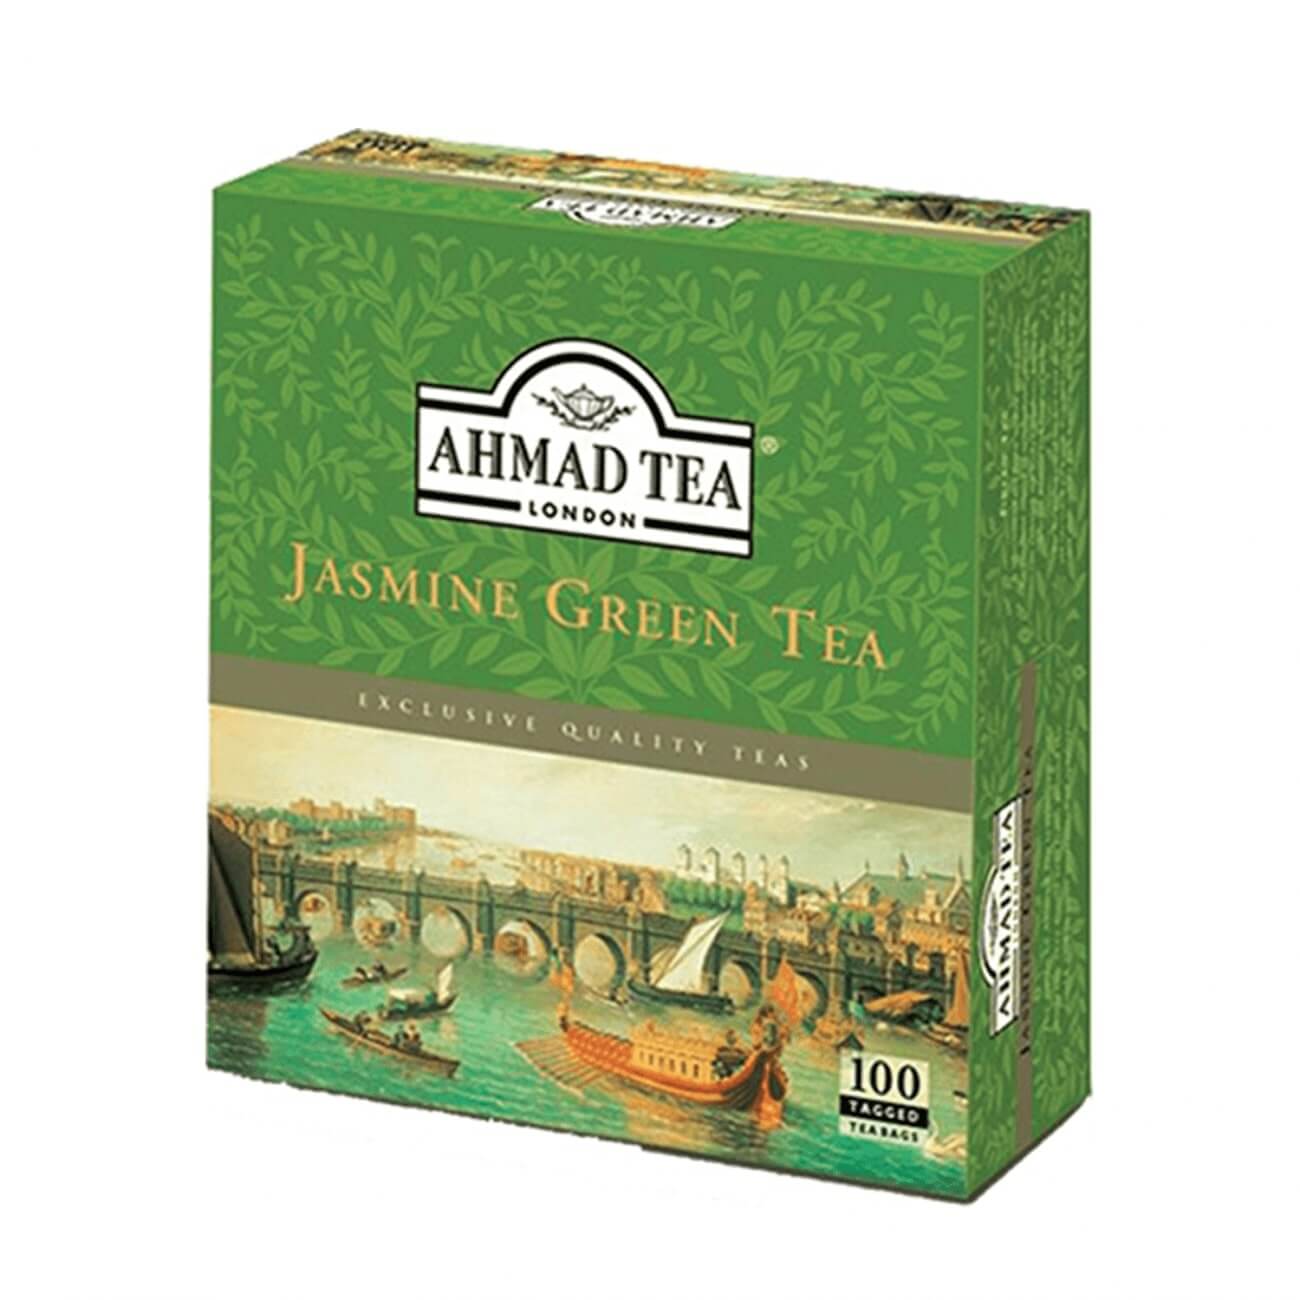 Ahmad Tea Jasmine Green Tea Bag (100 bags) - Aytac Foods